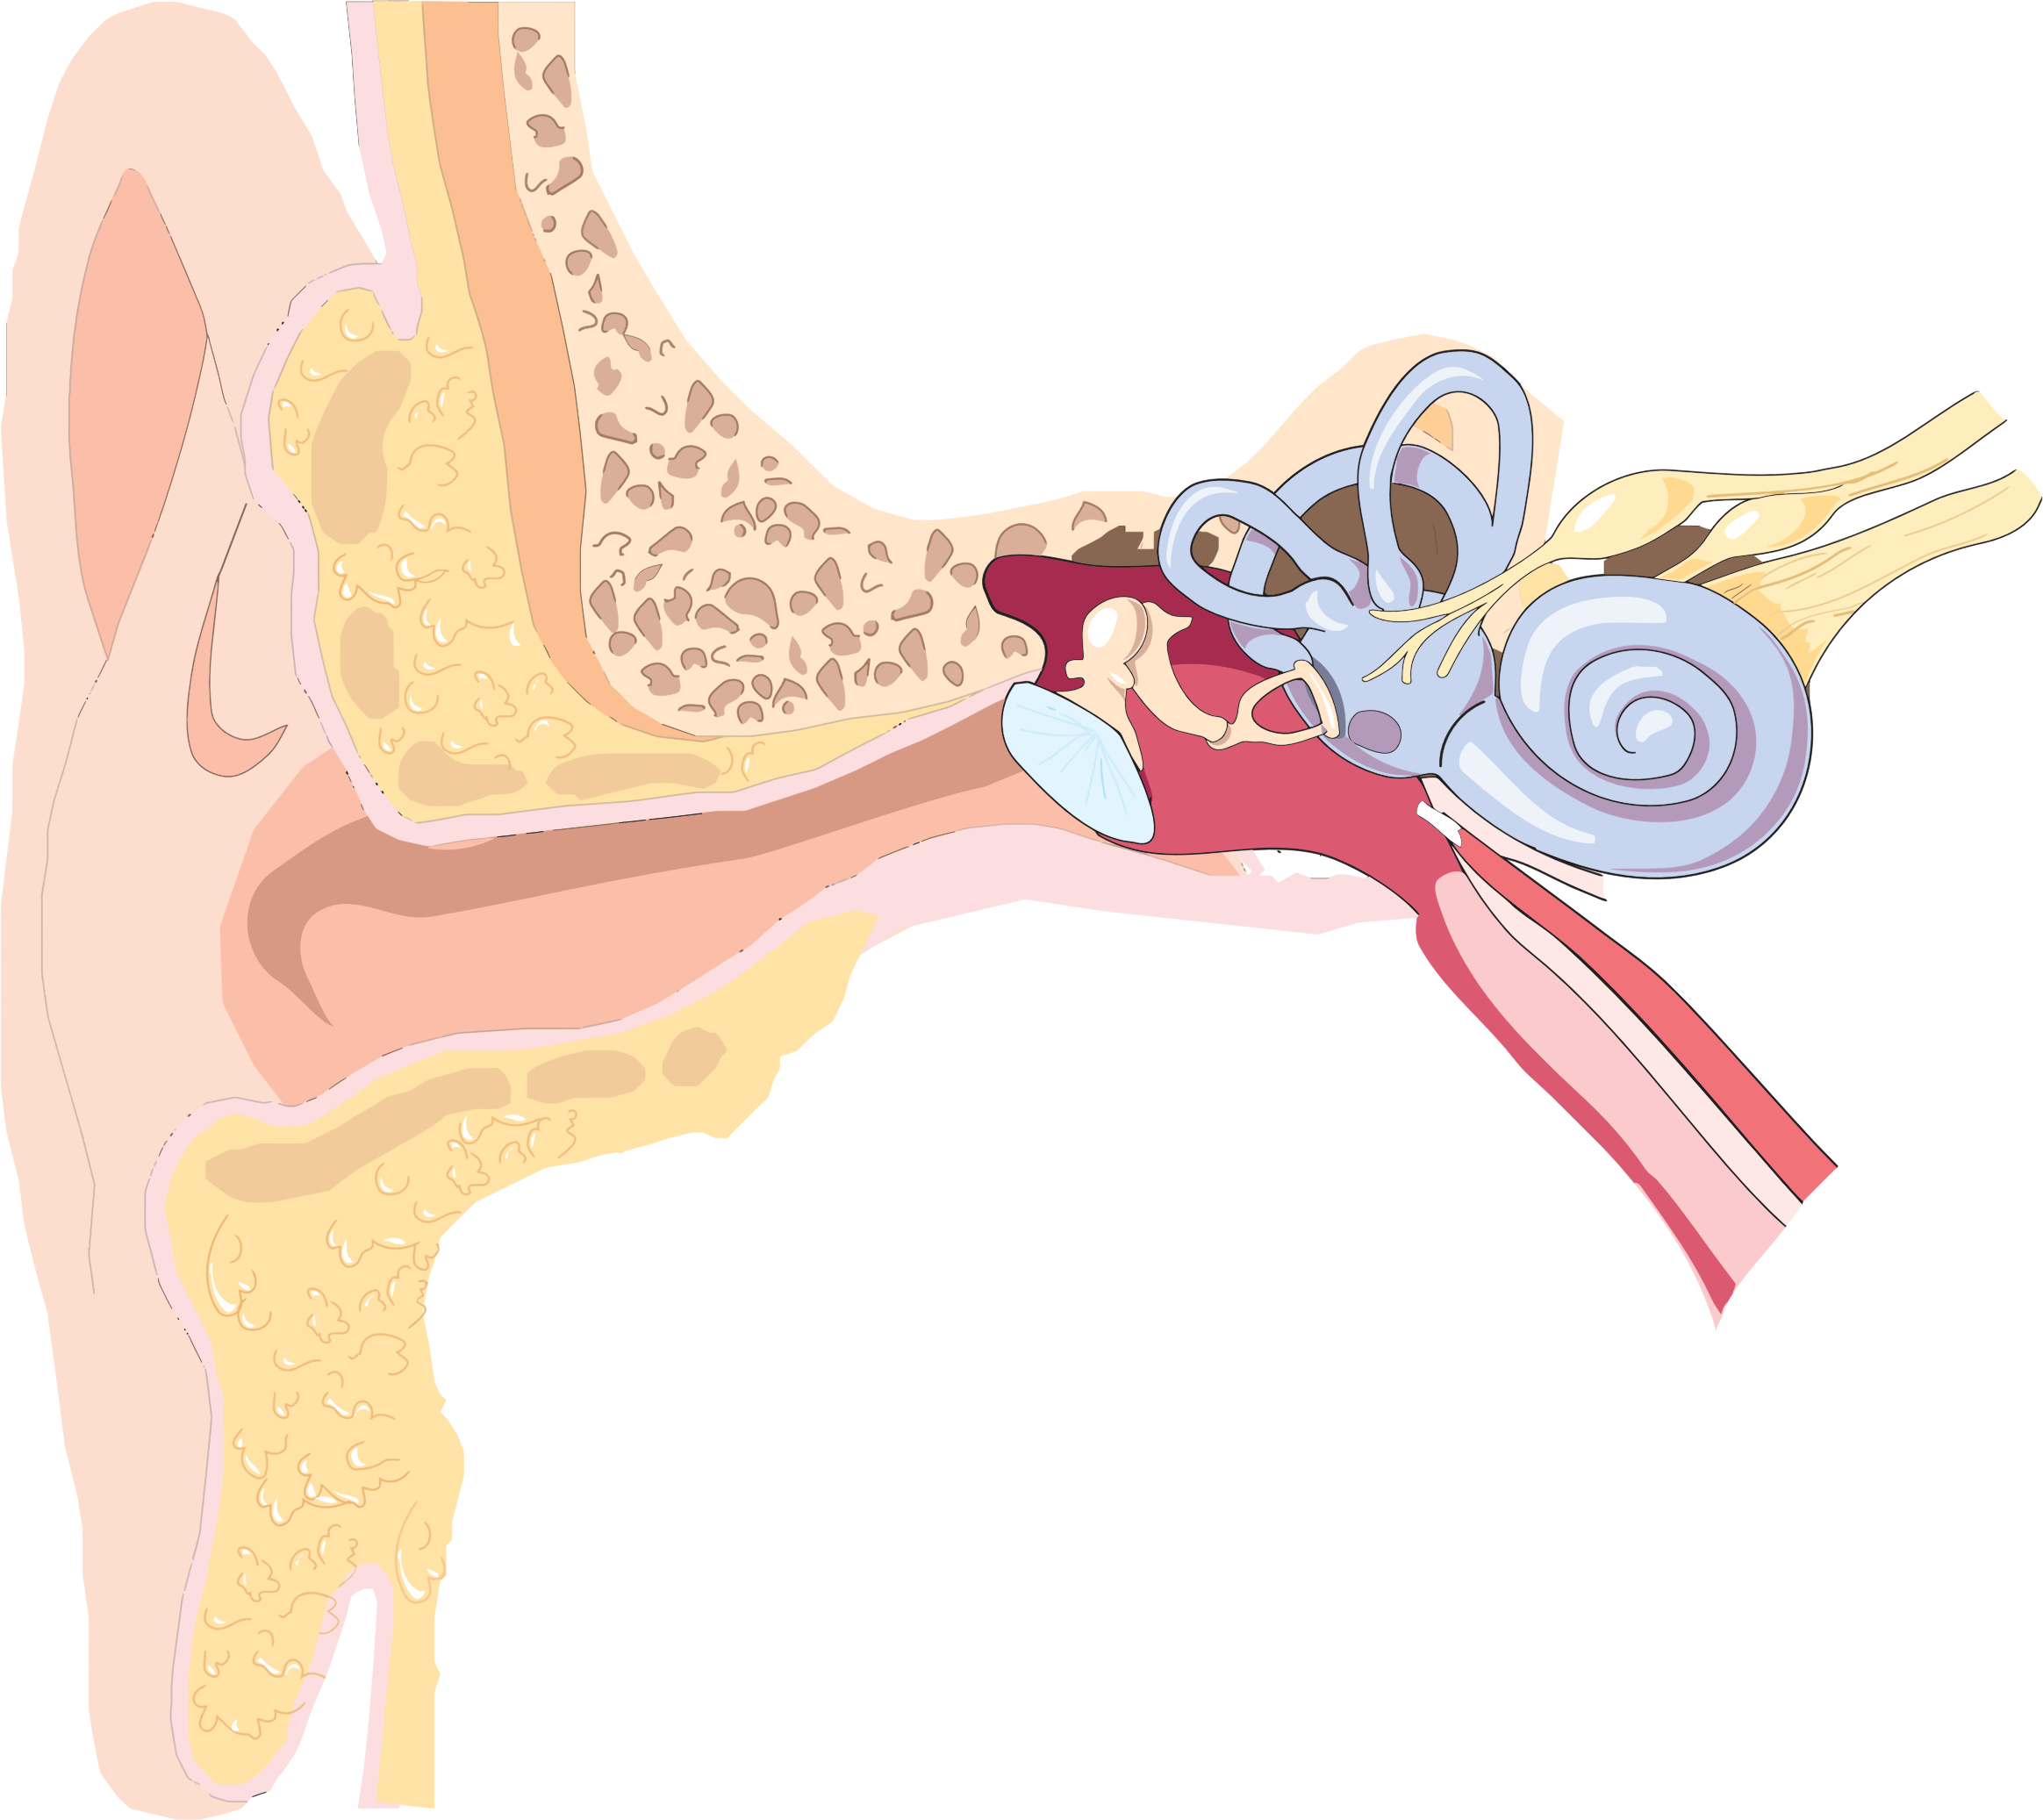 Ear big image png. Ears clipart anatomy